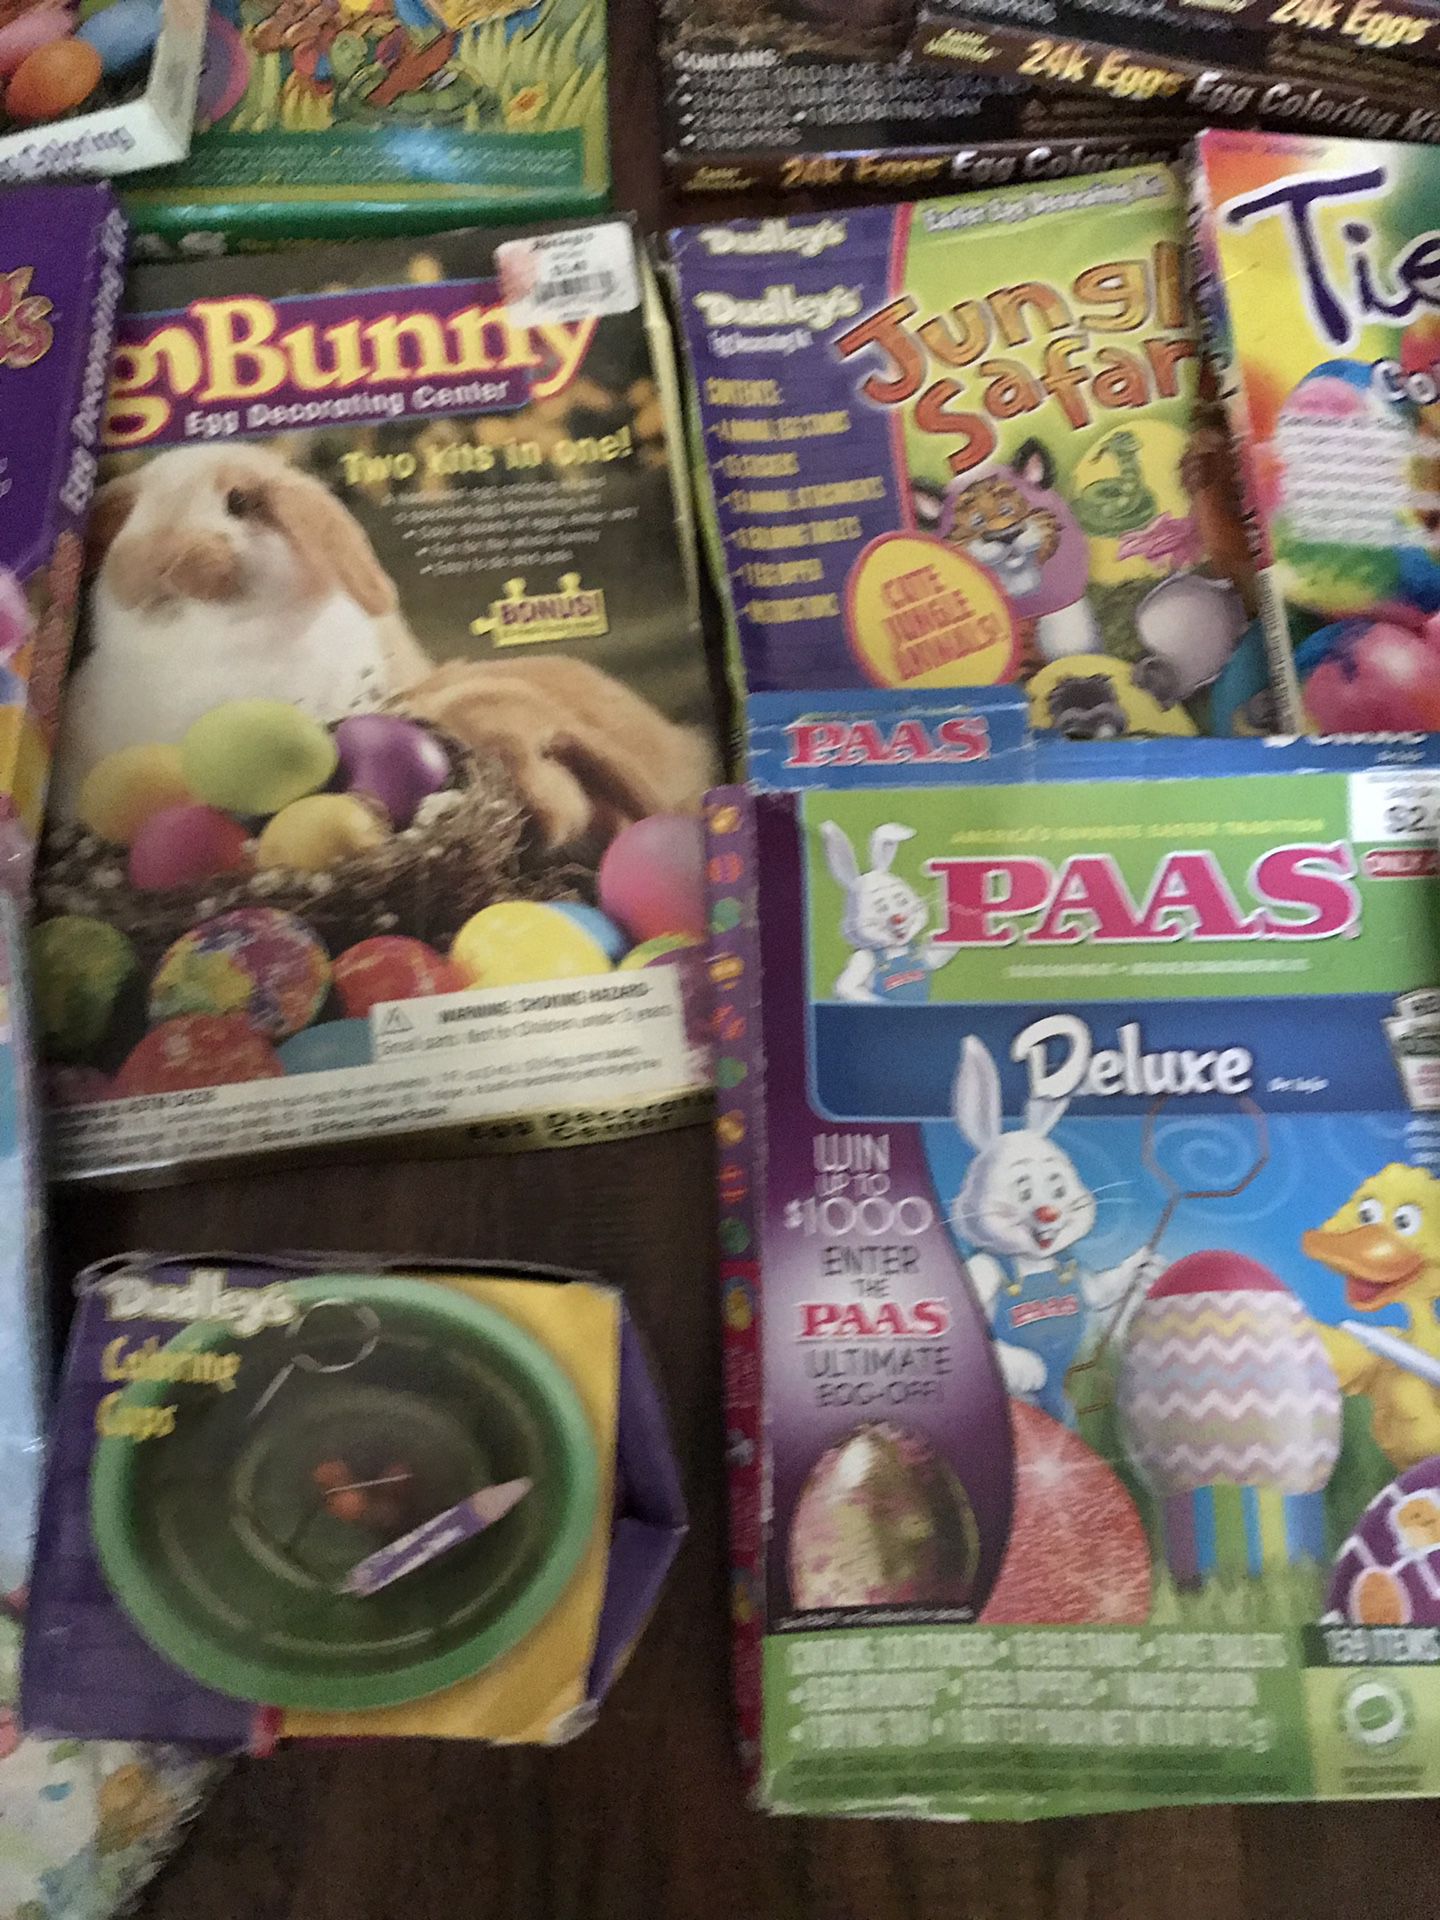 Easter egg decorating kit,gift bags all new